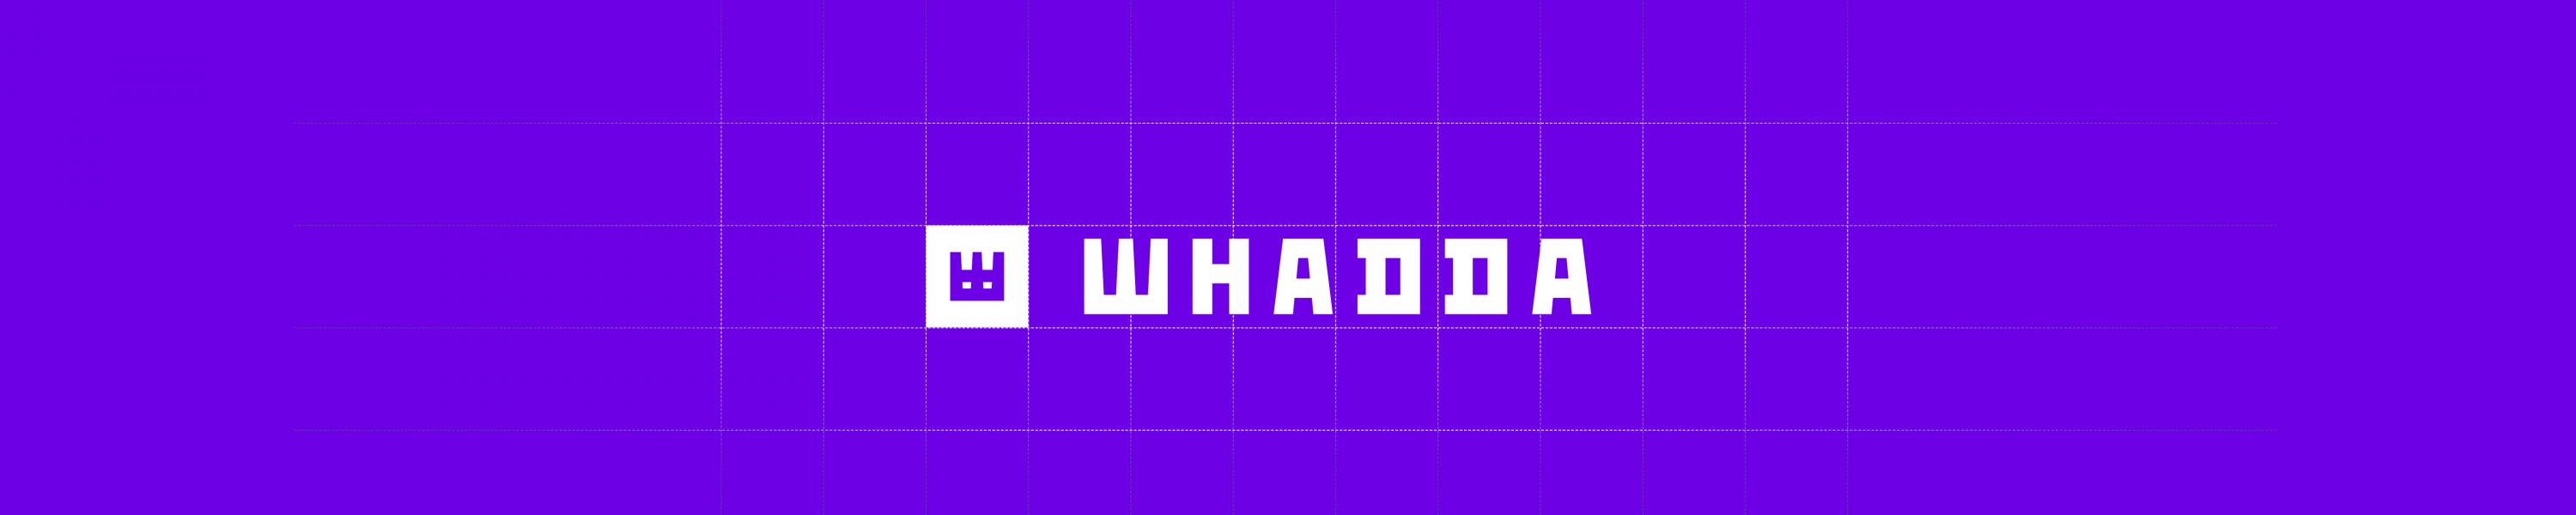 Whadda logo